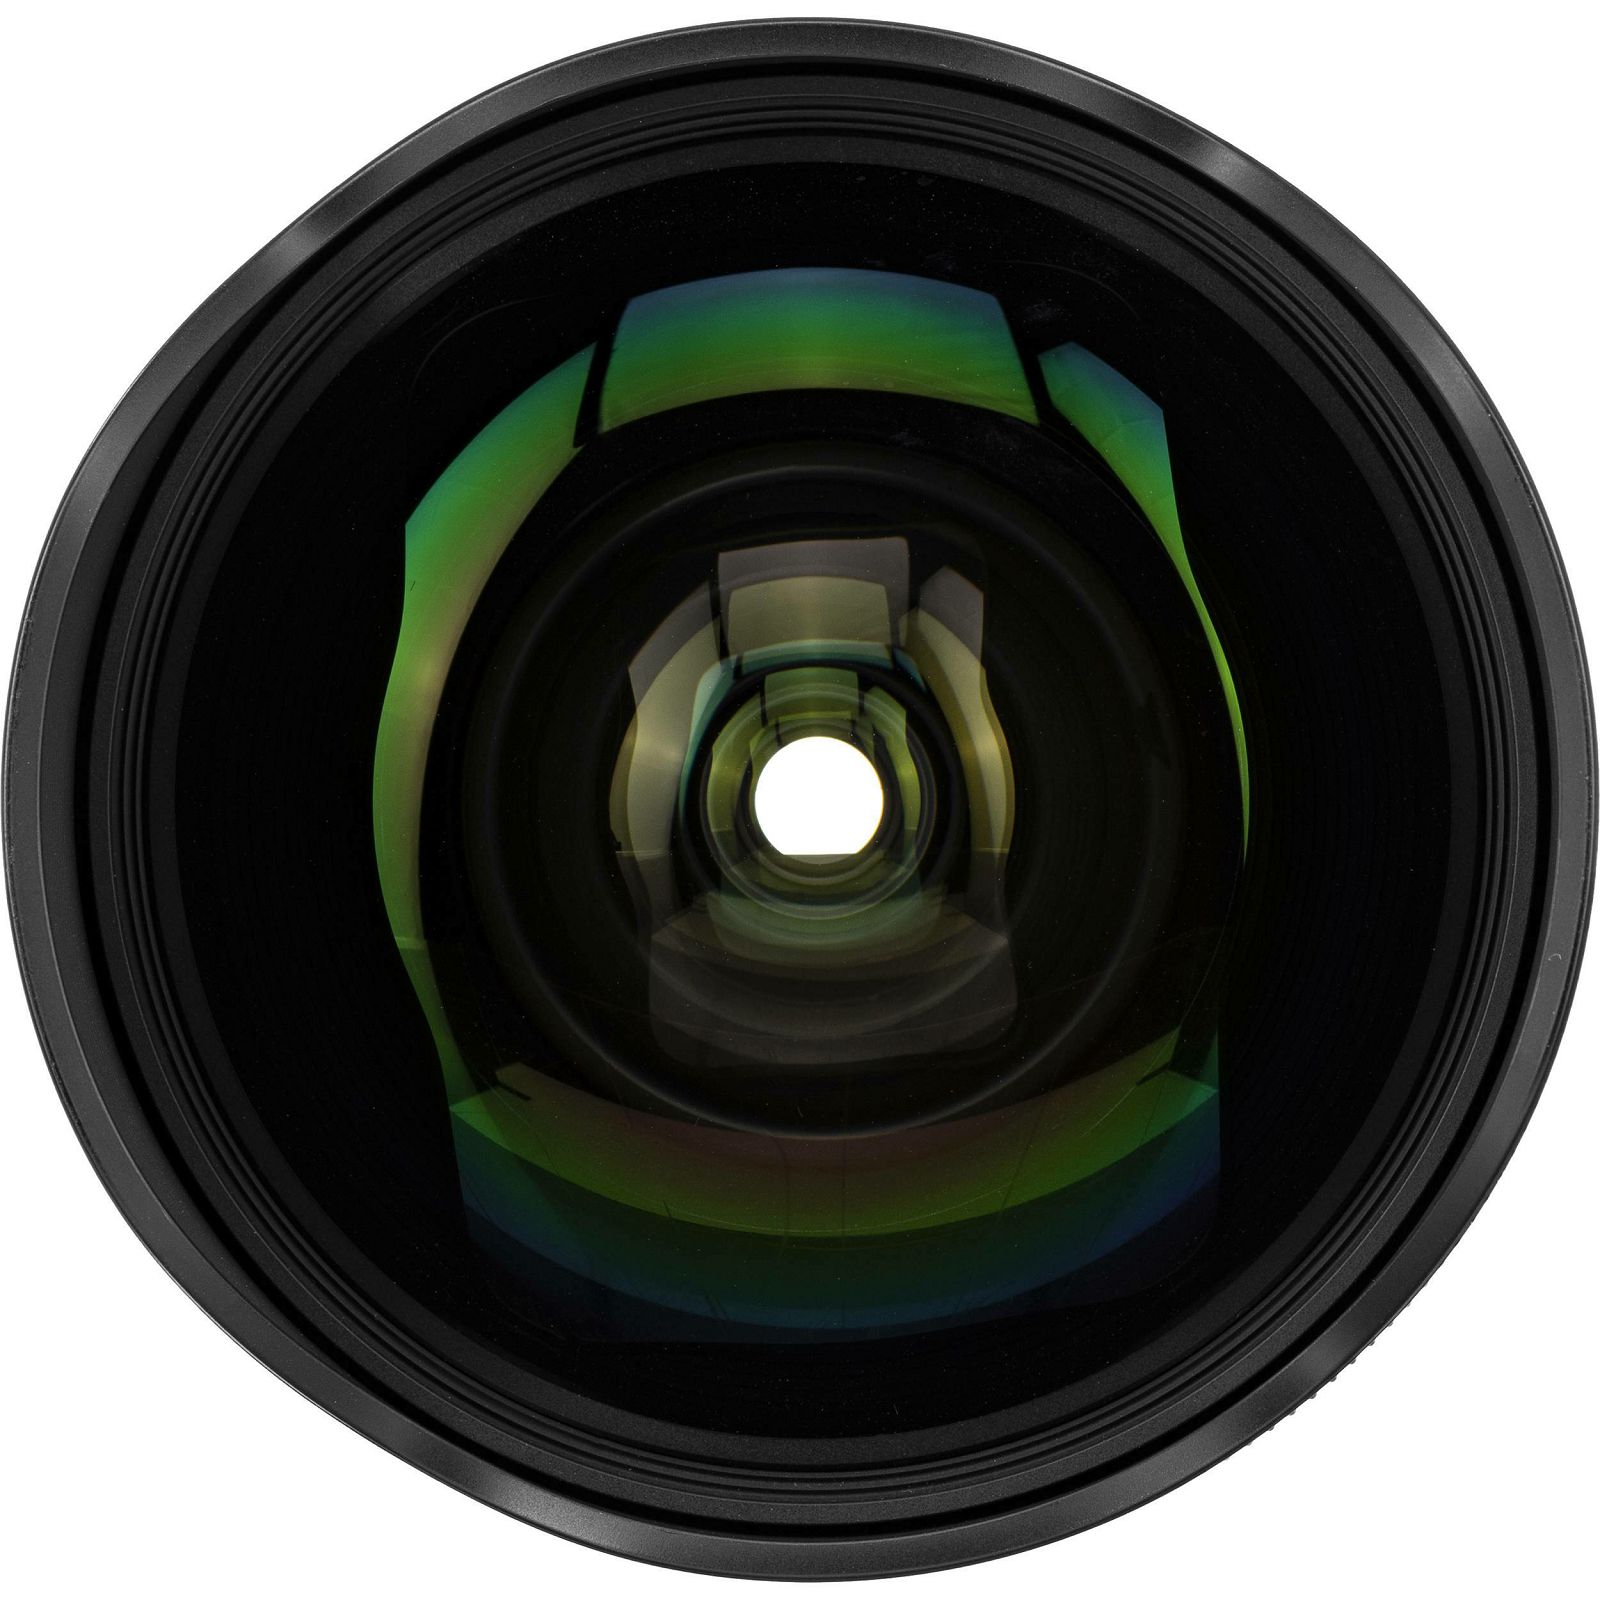 Sigma 14mm f/1.8 DG HSM Art Canon prime širokokutni objektiv